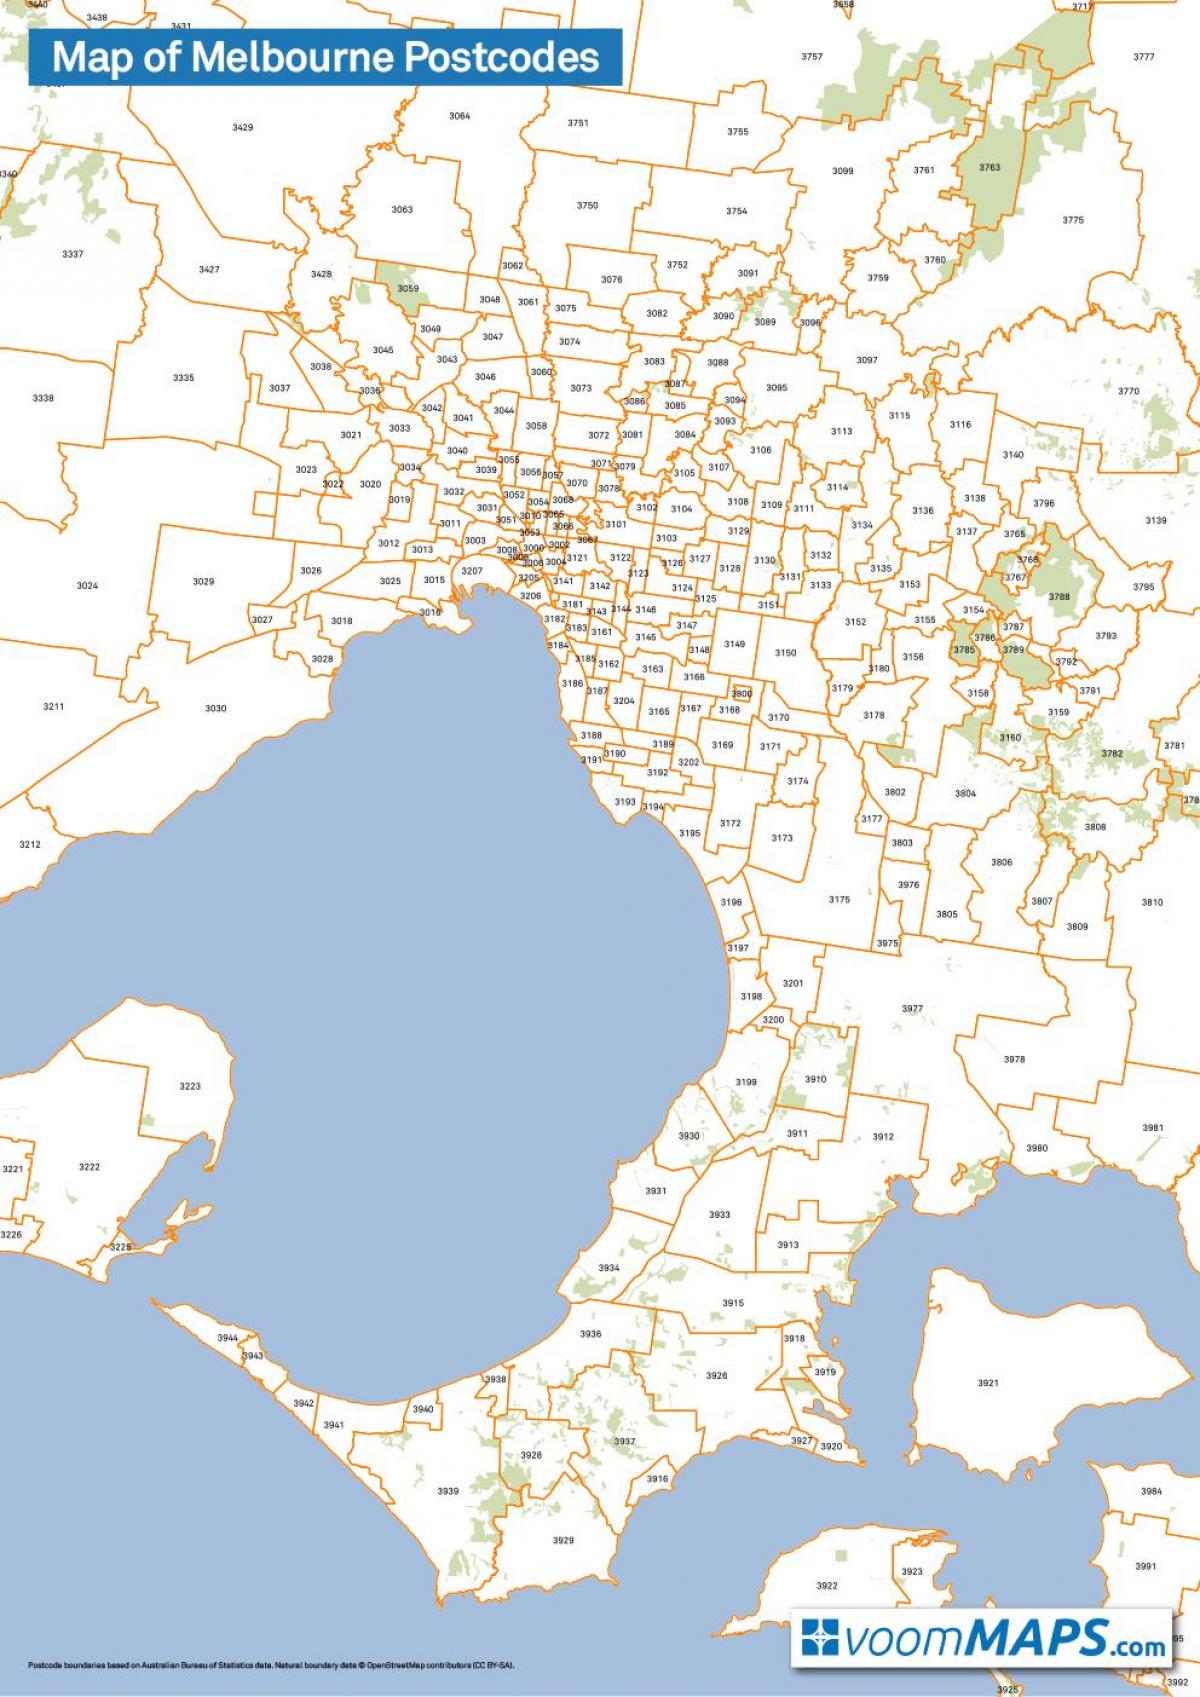 зураг Мельбурн postcodes